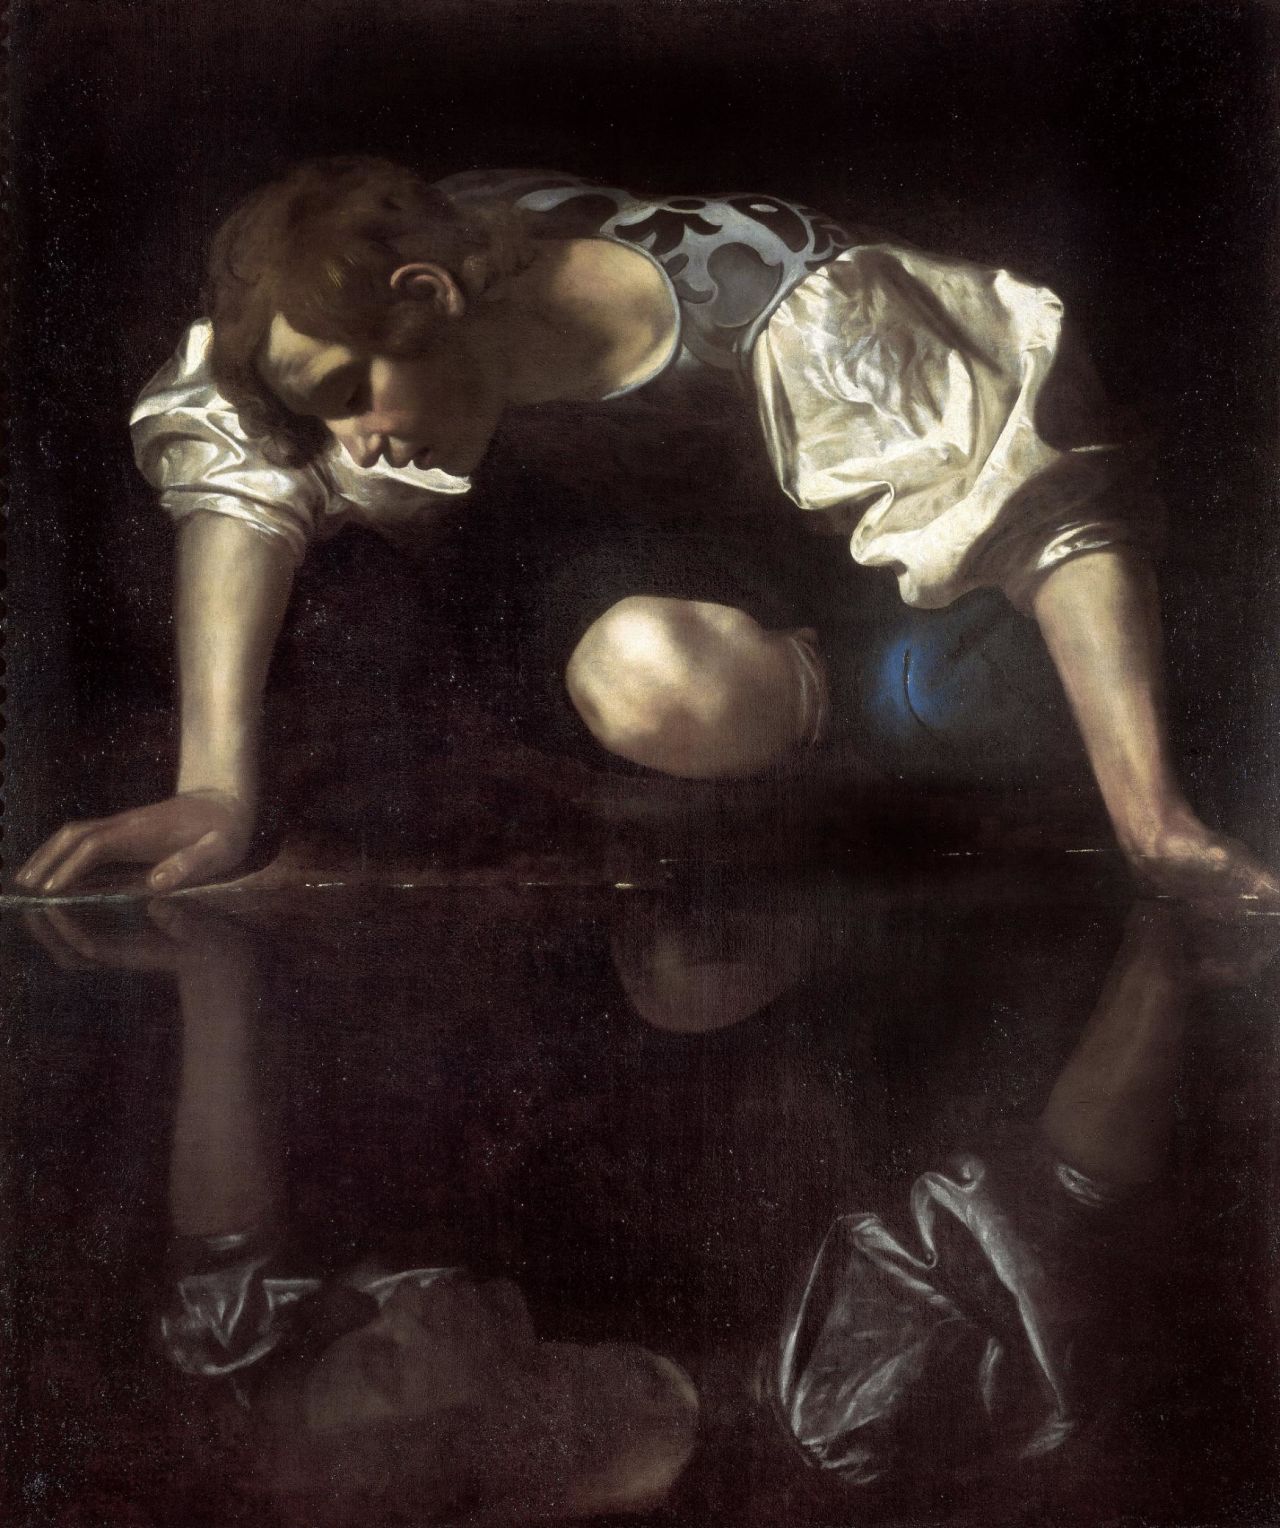 "Narcissus" (c.1600-10) by Michelangelo Merisi da Caravaggio